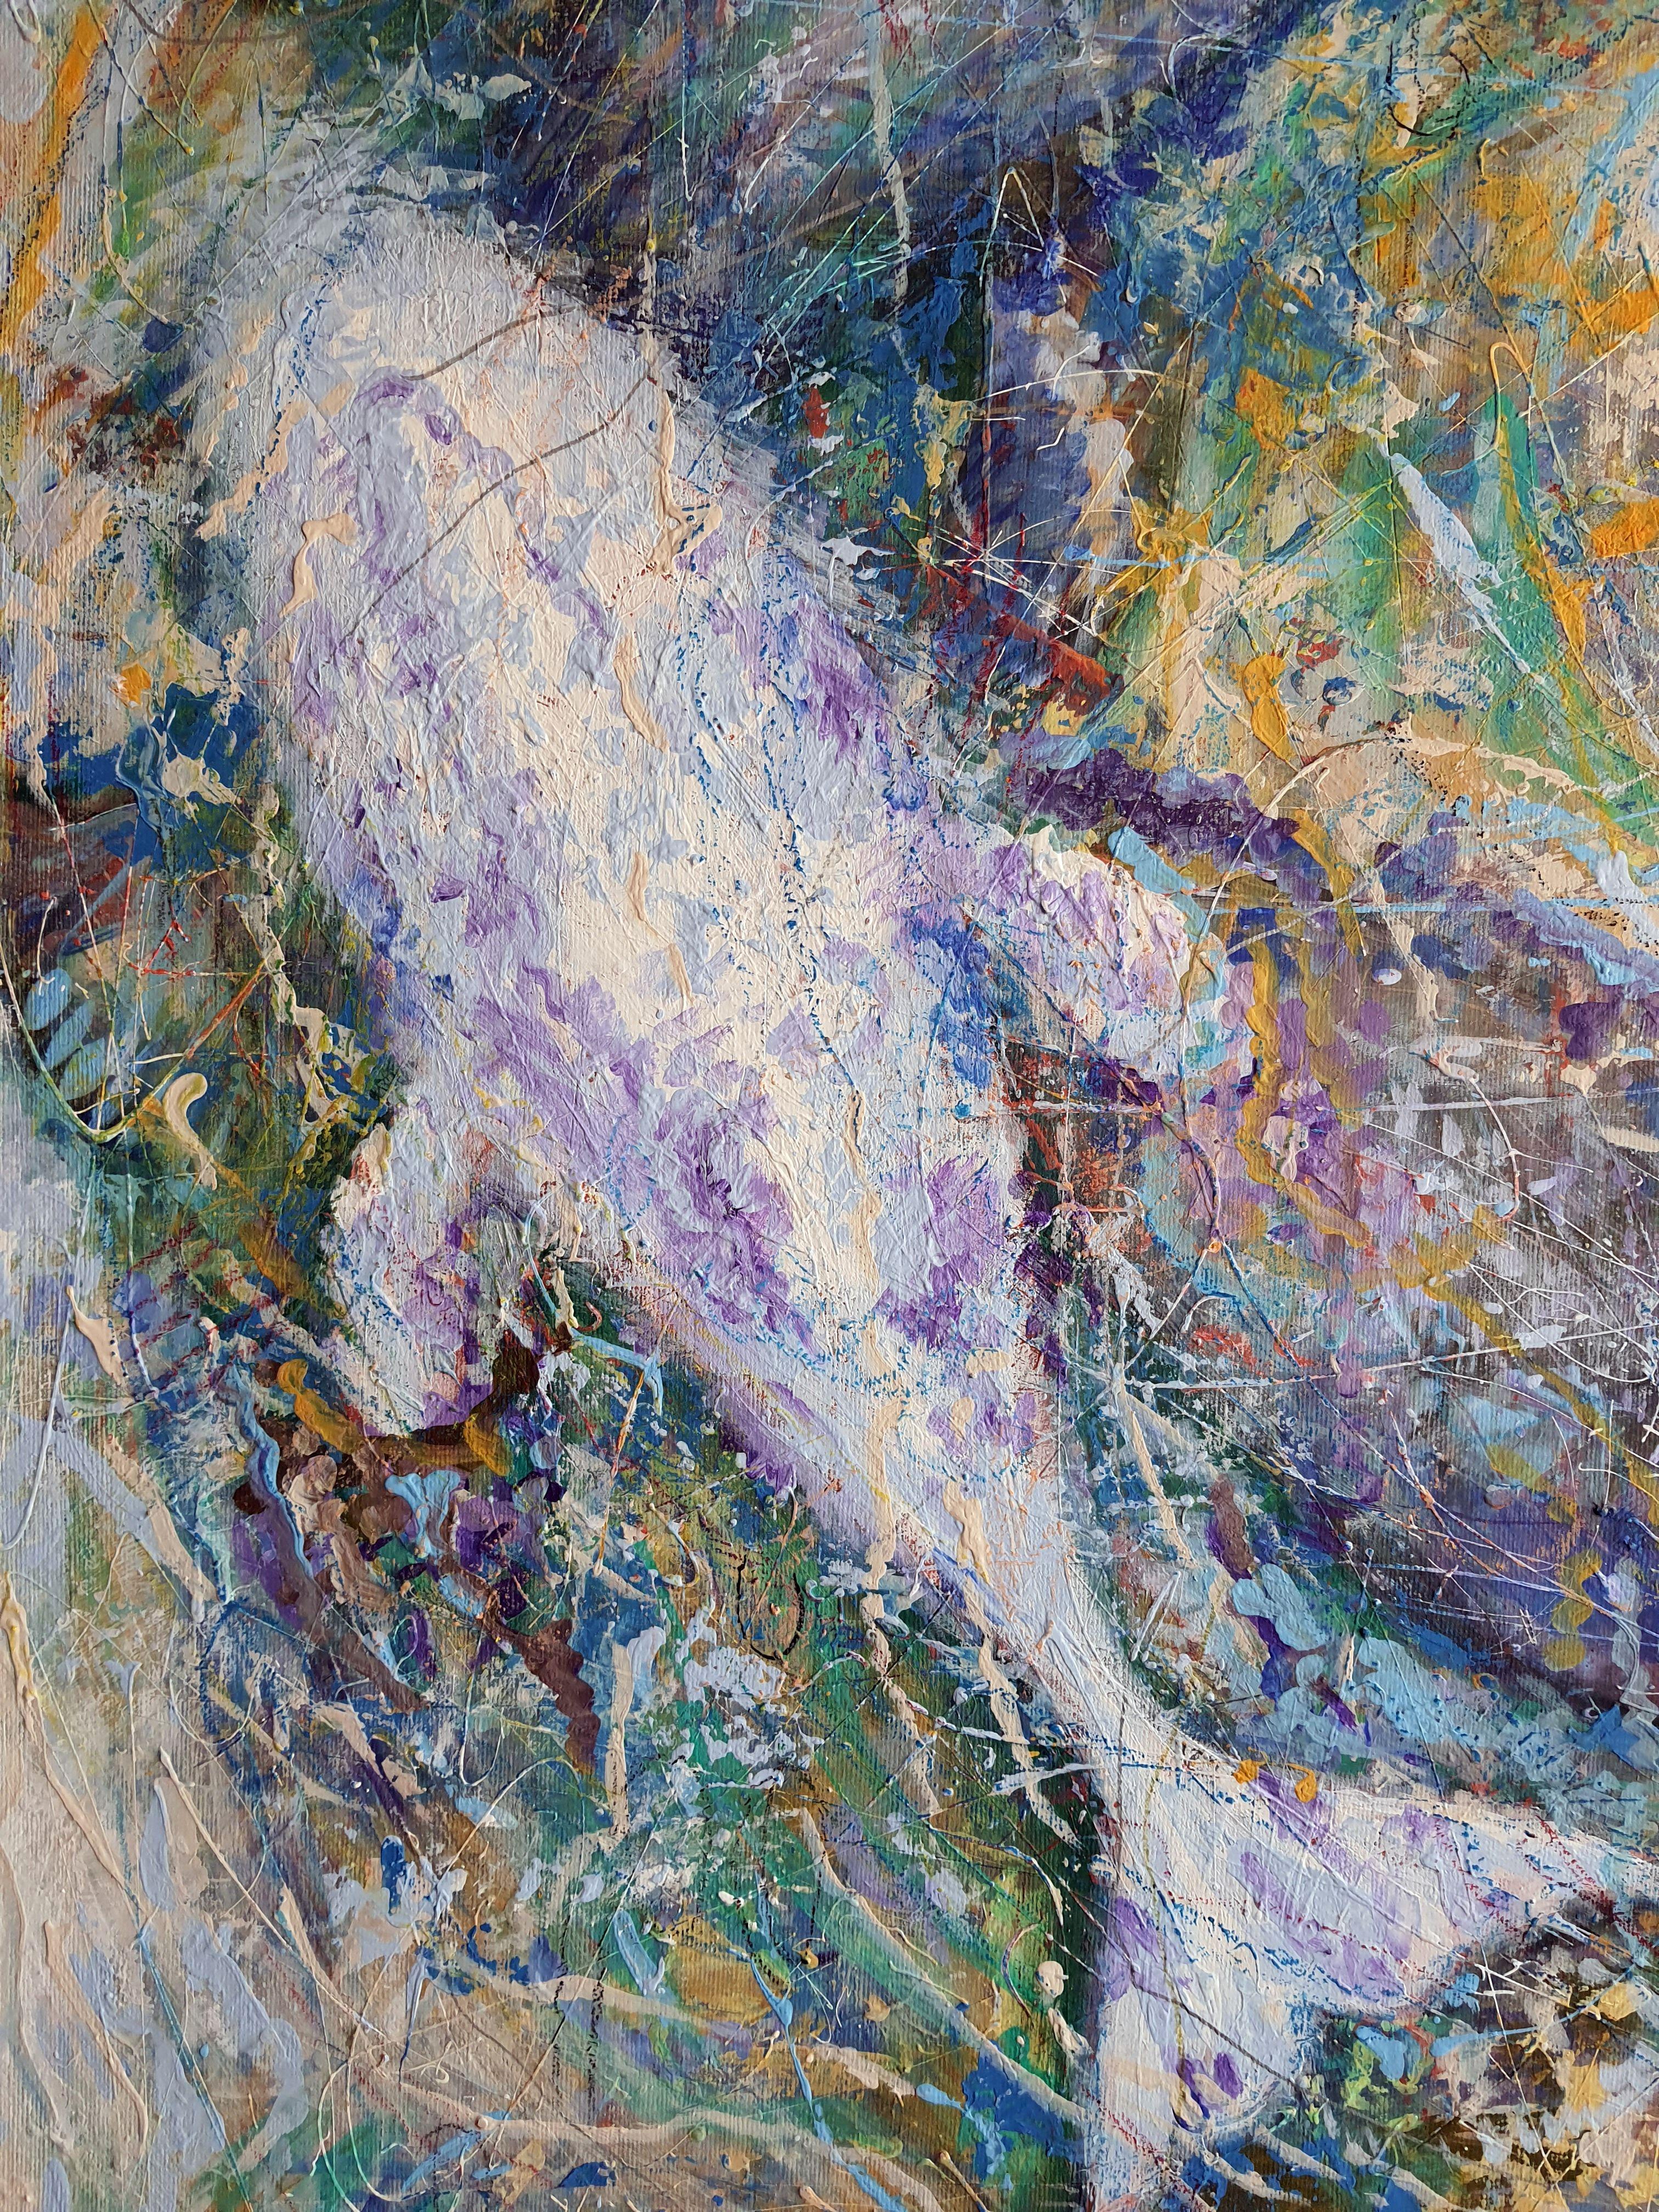 White Whale - Impressionist Painting by RAKHMET REDZHEPOV (RAMZI)